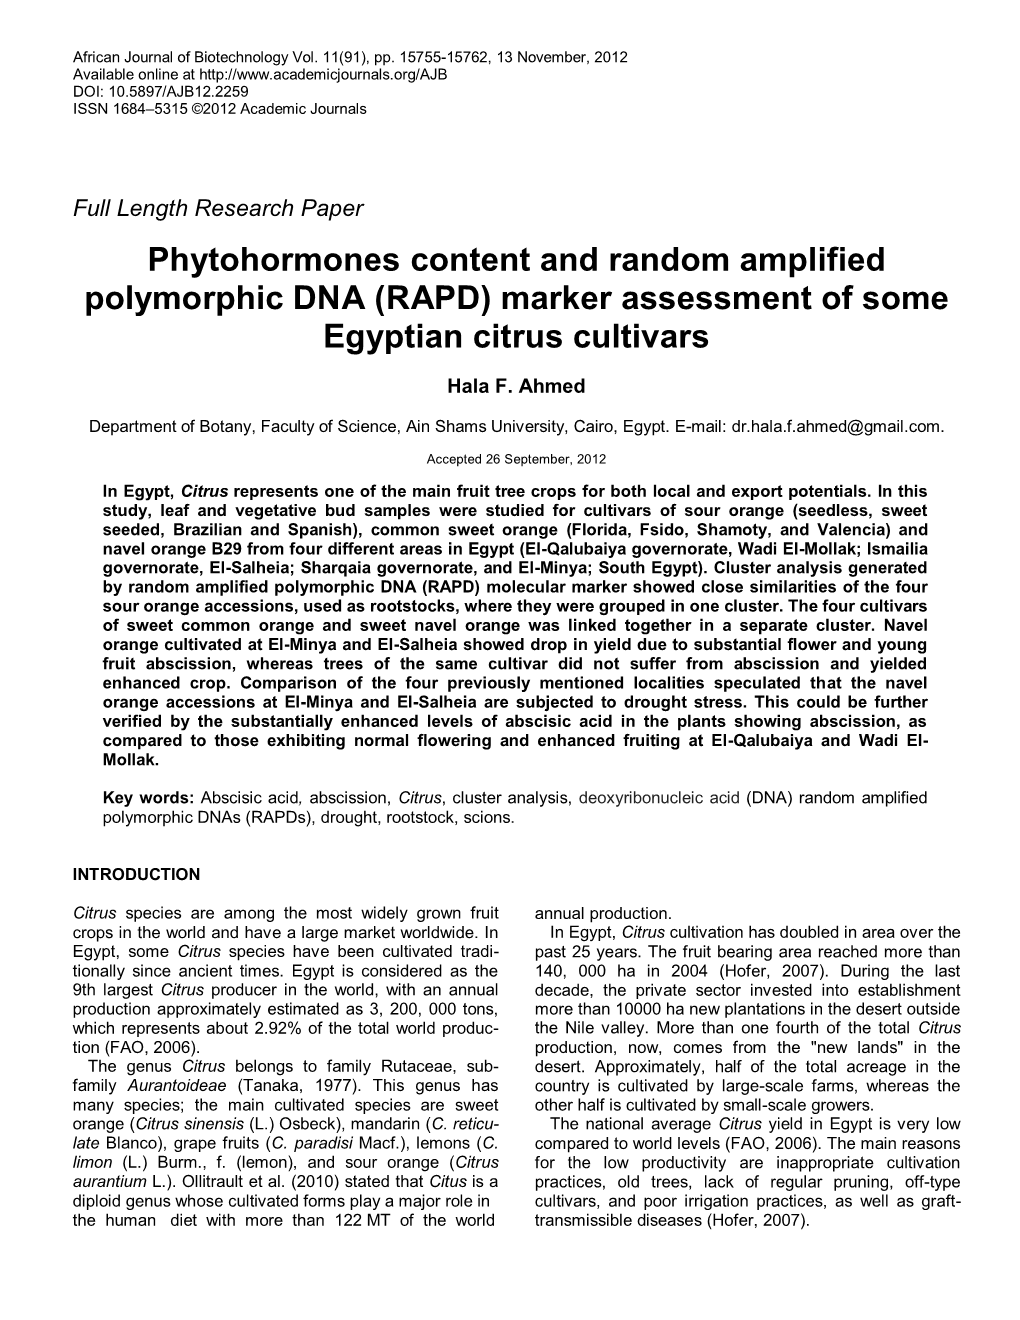 Variation of Citrus Cultivars in Egypt Assessed